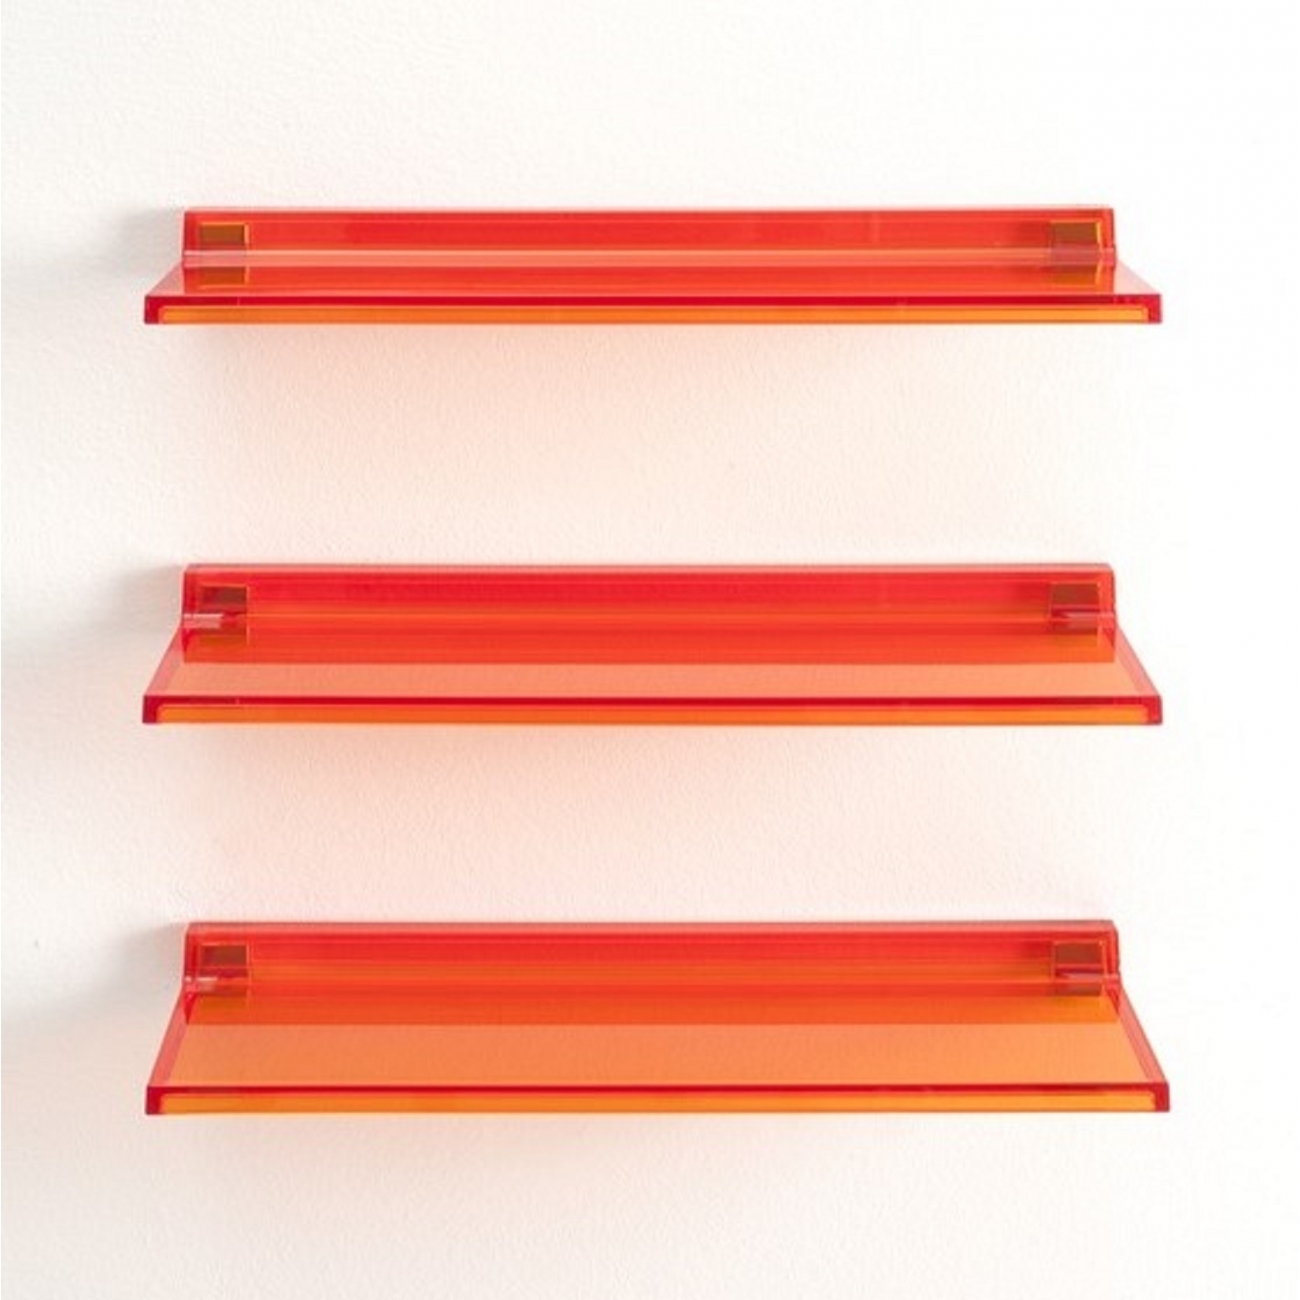 Полочка настенная  Kartell by Laufen  3.8533.0.082.000.1  45 см,  пластик оранжевый